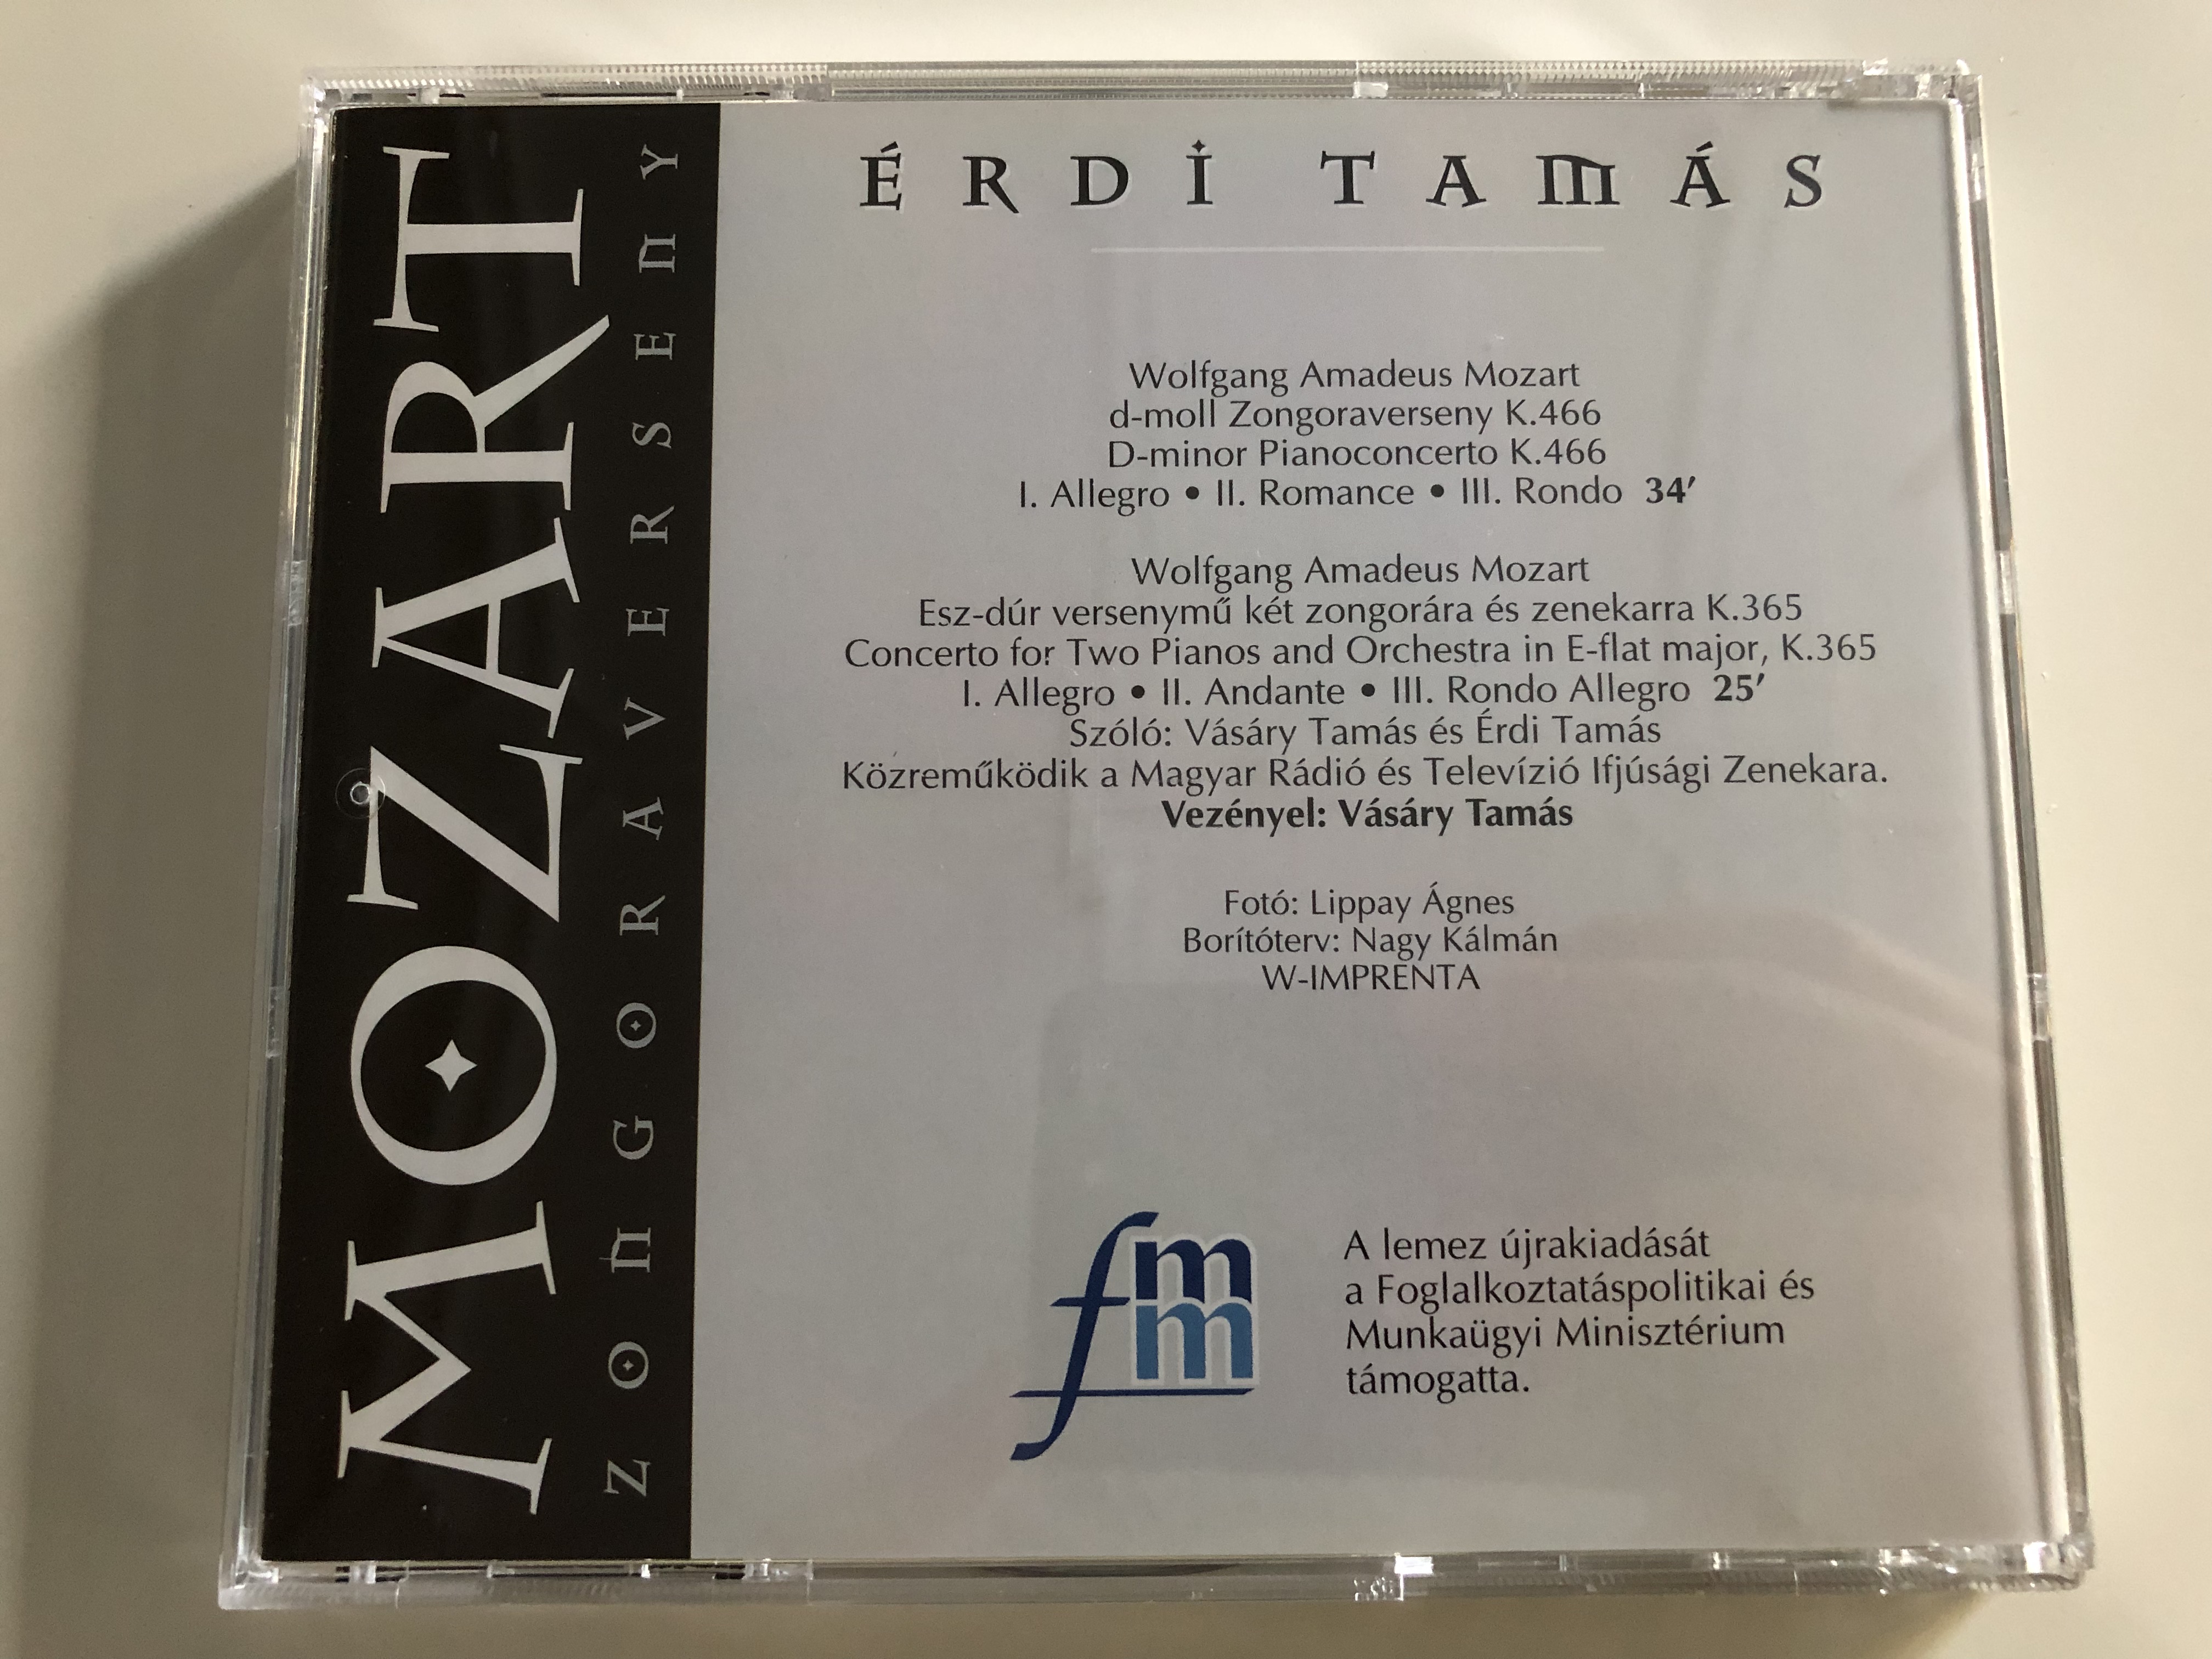 rdi-tam-s-mozart-zongoraverseny-hungarian-rtv-youth-orchestra-conducted-by-v-s-ry-tam-s-audio-cd-pmhu-01-5-.jpg